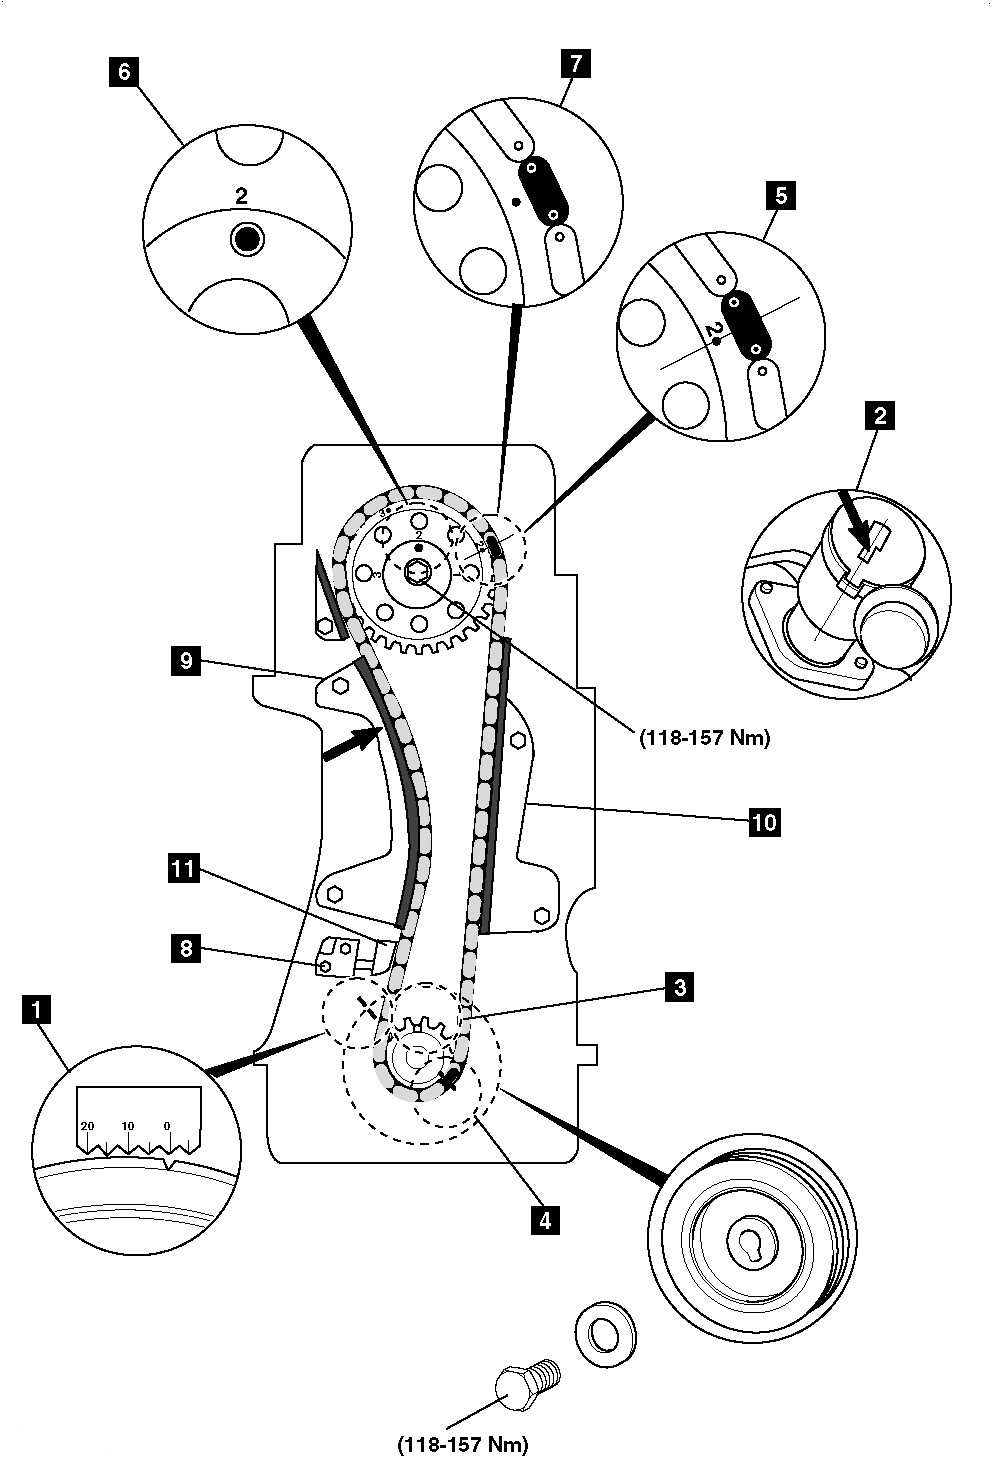 Nissan 2018 zd30 engine manual transmissions